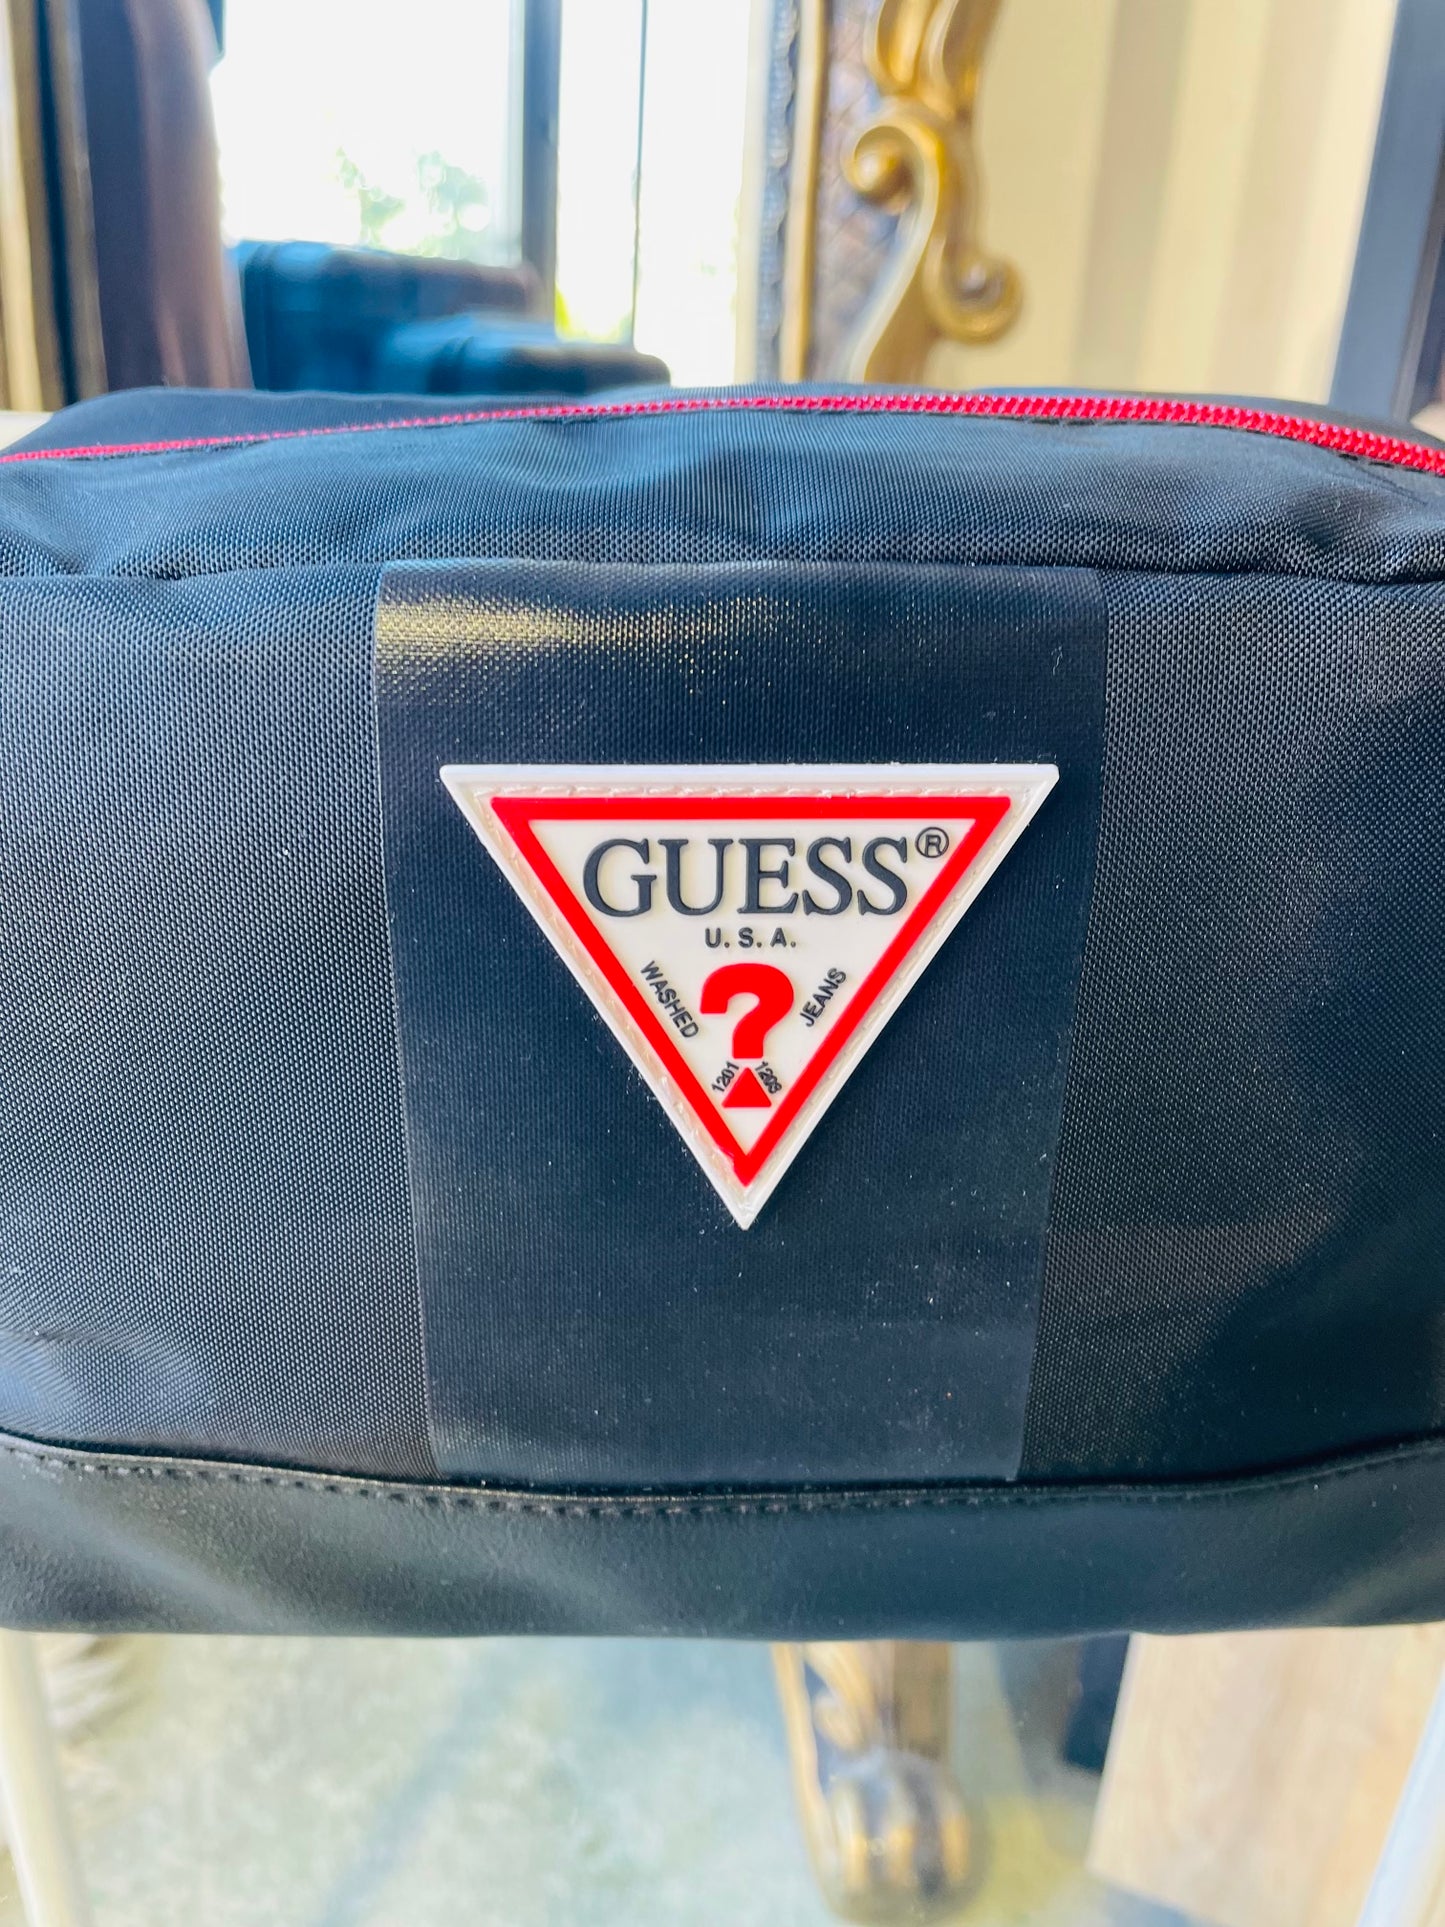 Guess hand bag